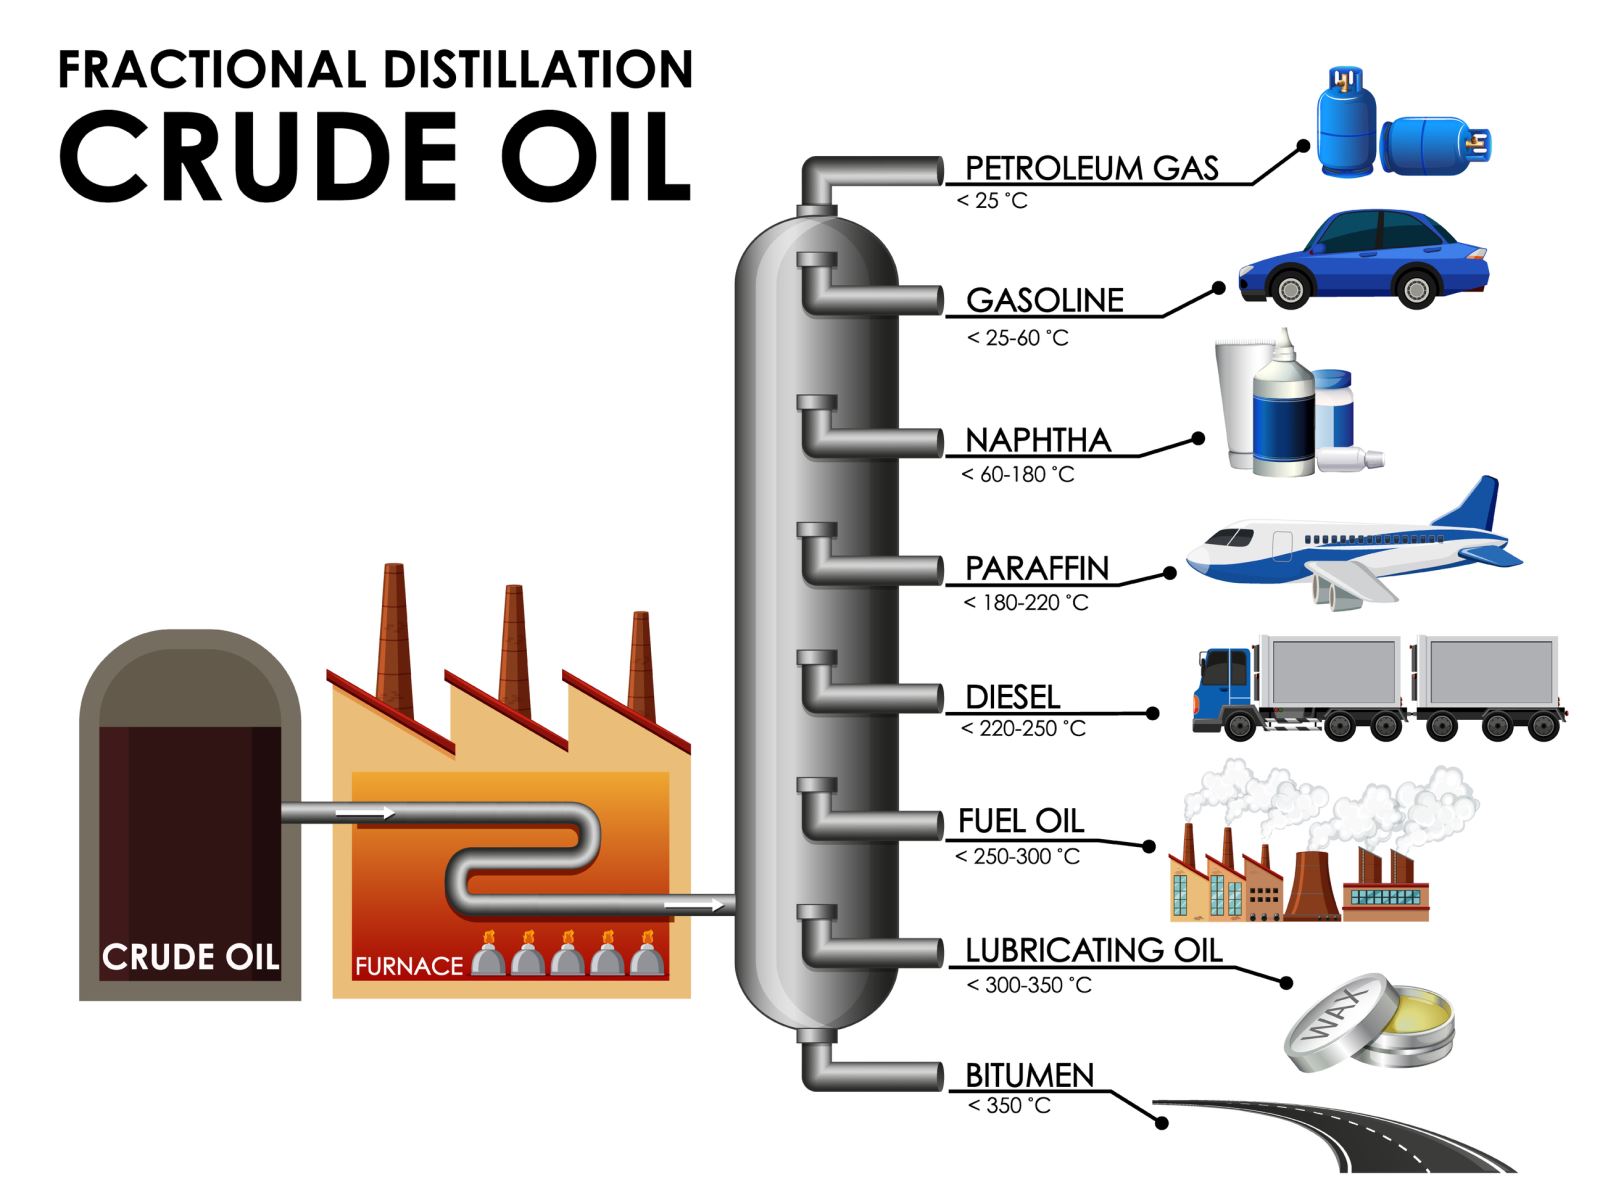 Oil distillation